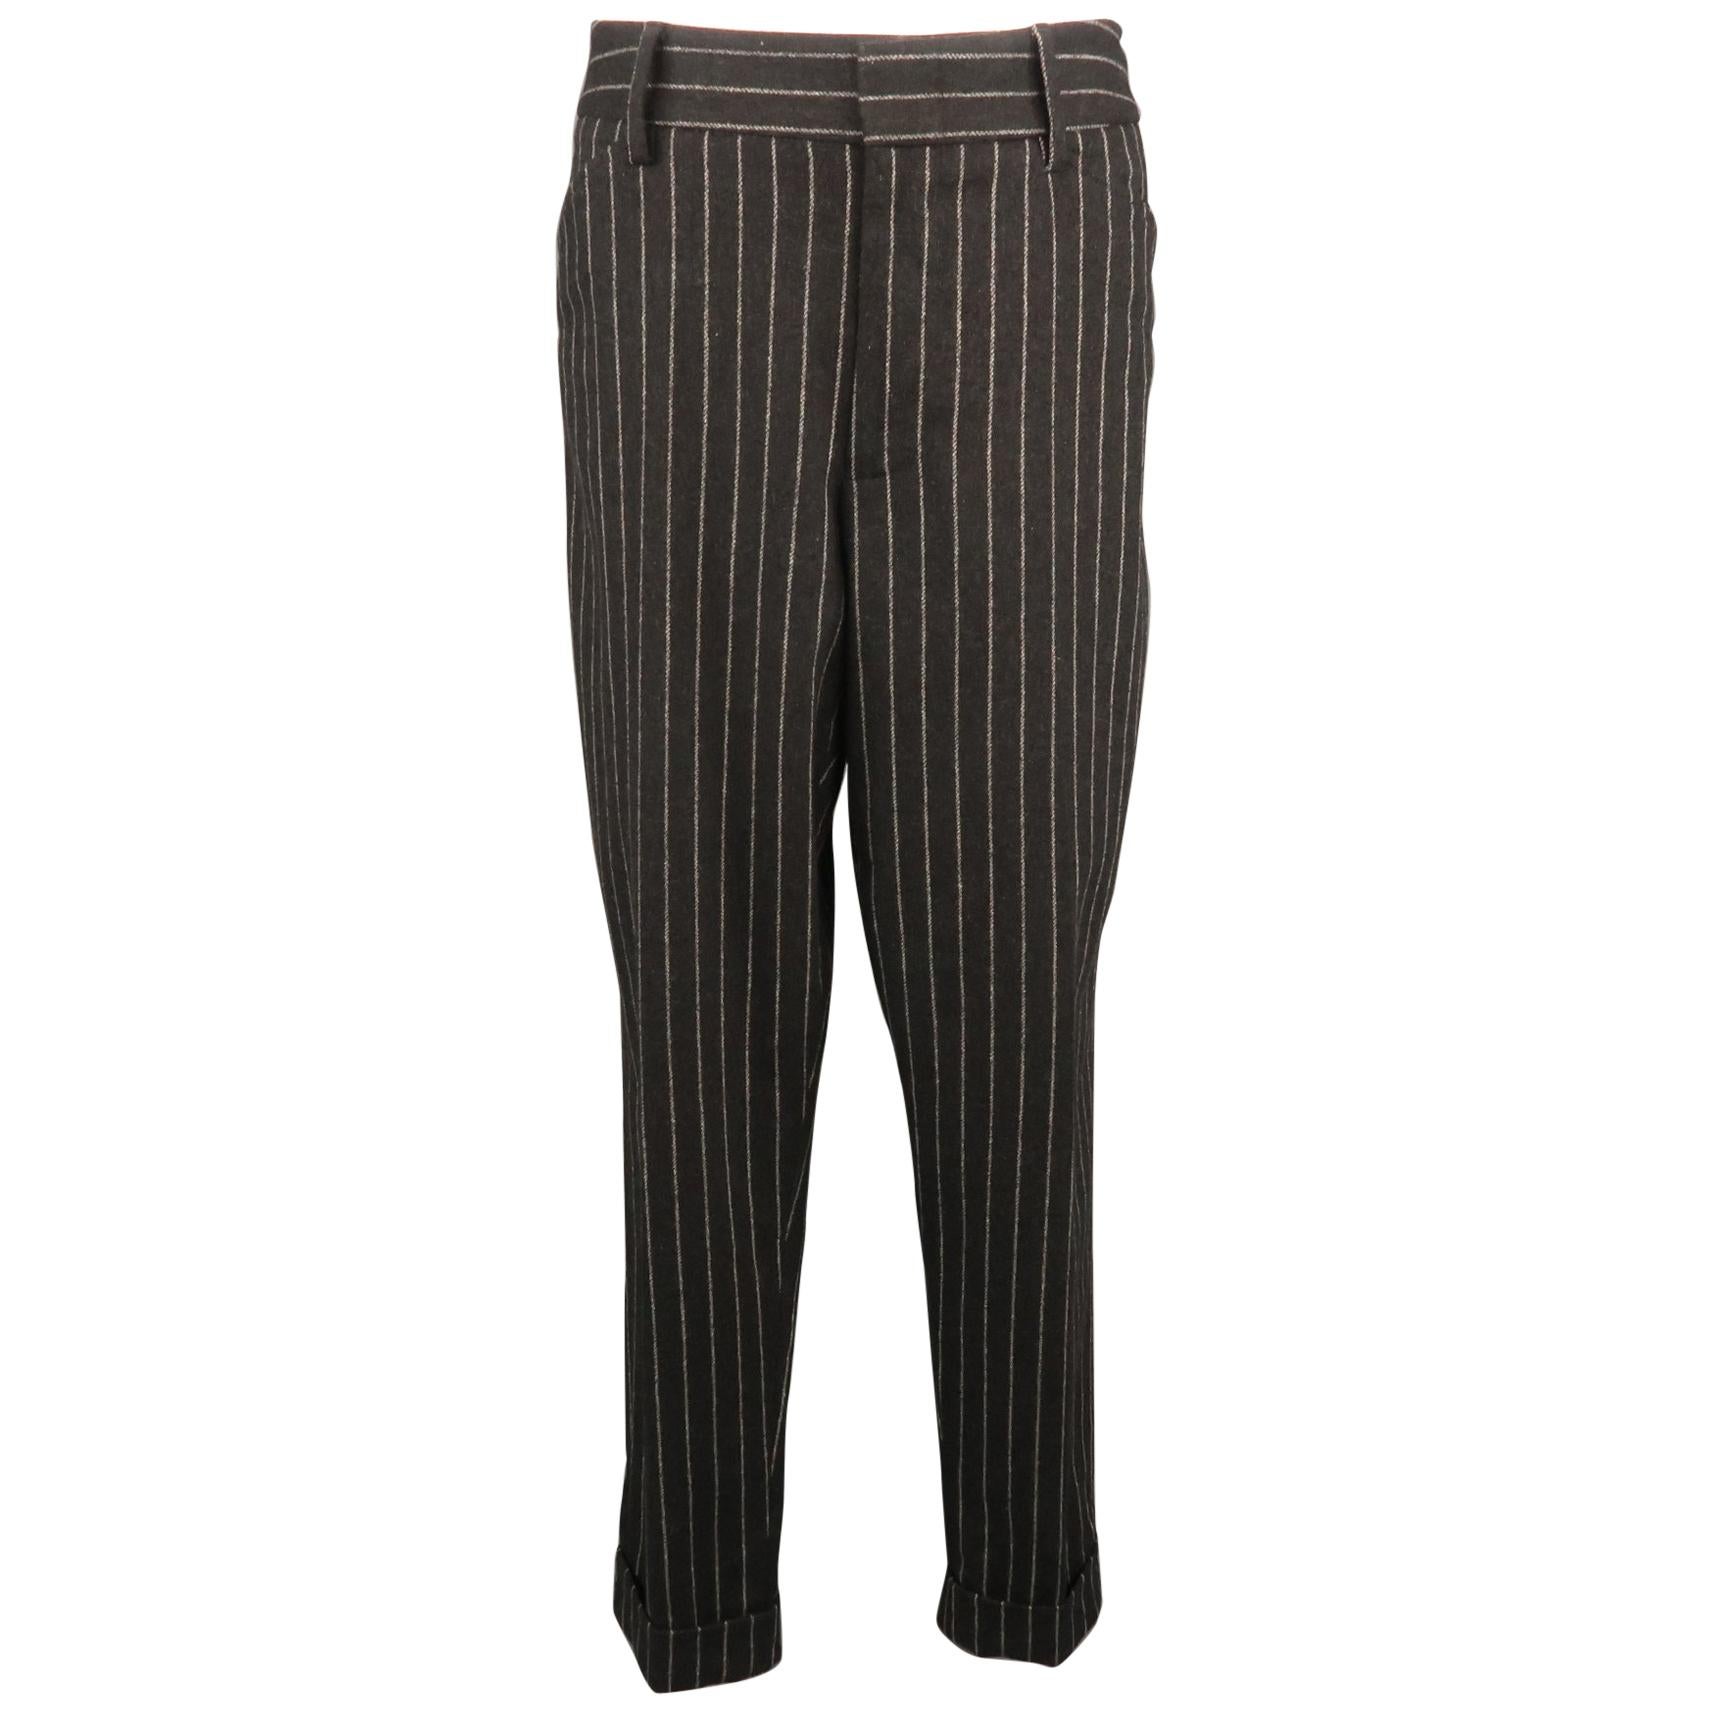 DOLCE & GABBANA Size 35 Charcoal Chalkstripe Wool Blend 29 Cuffed Dress Pants